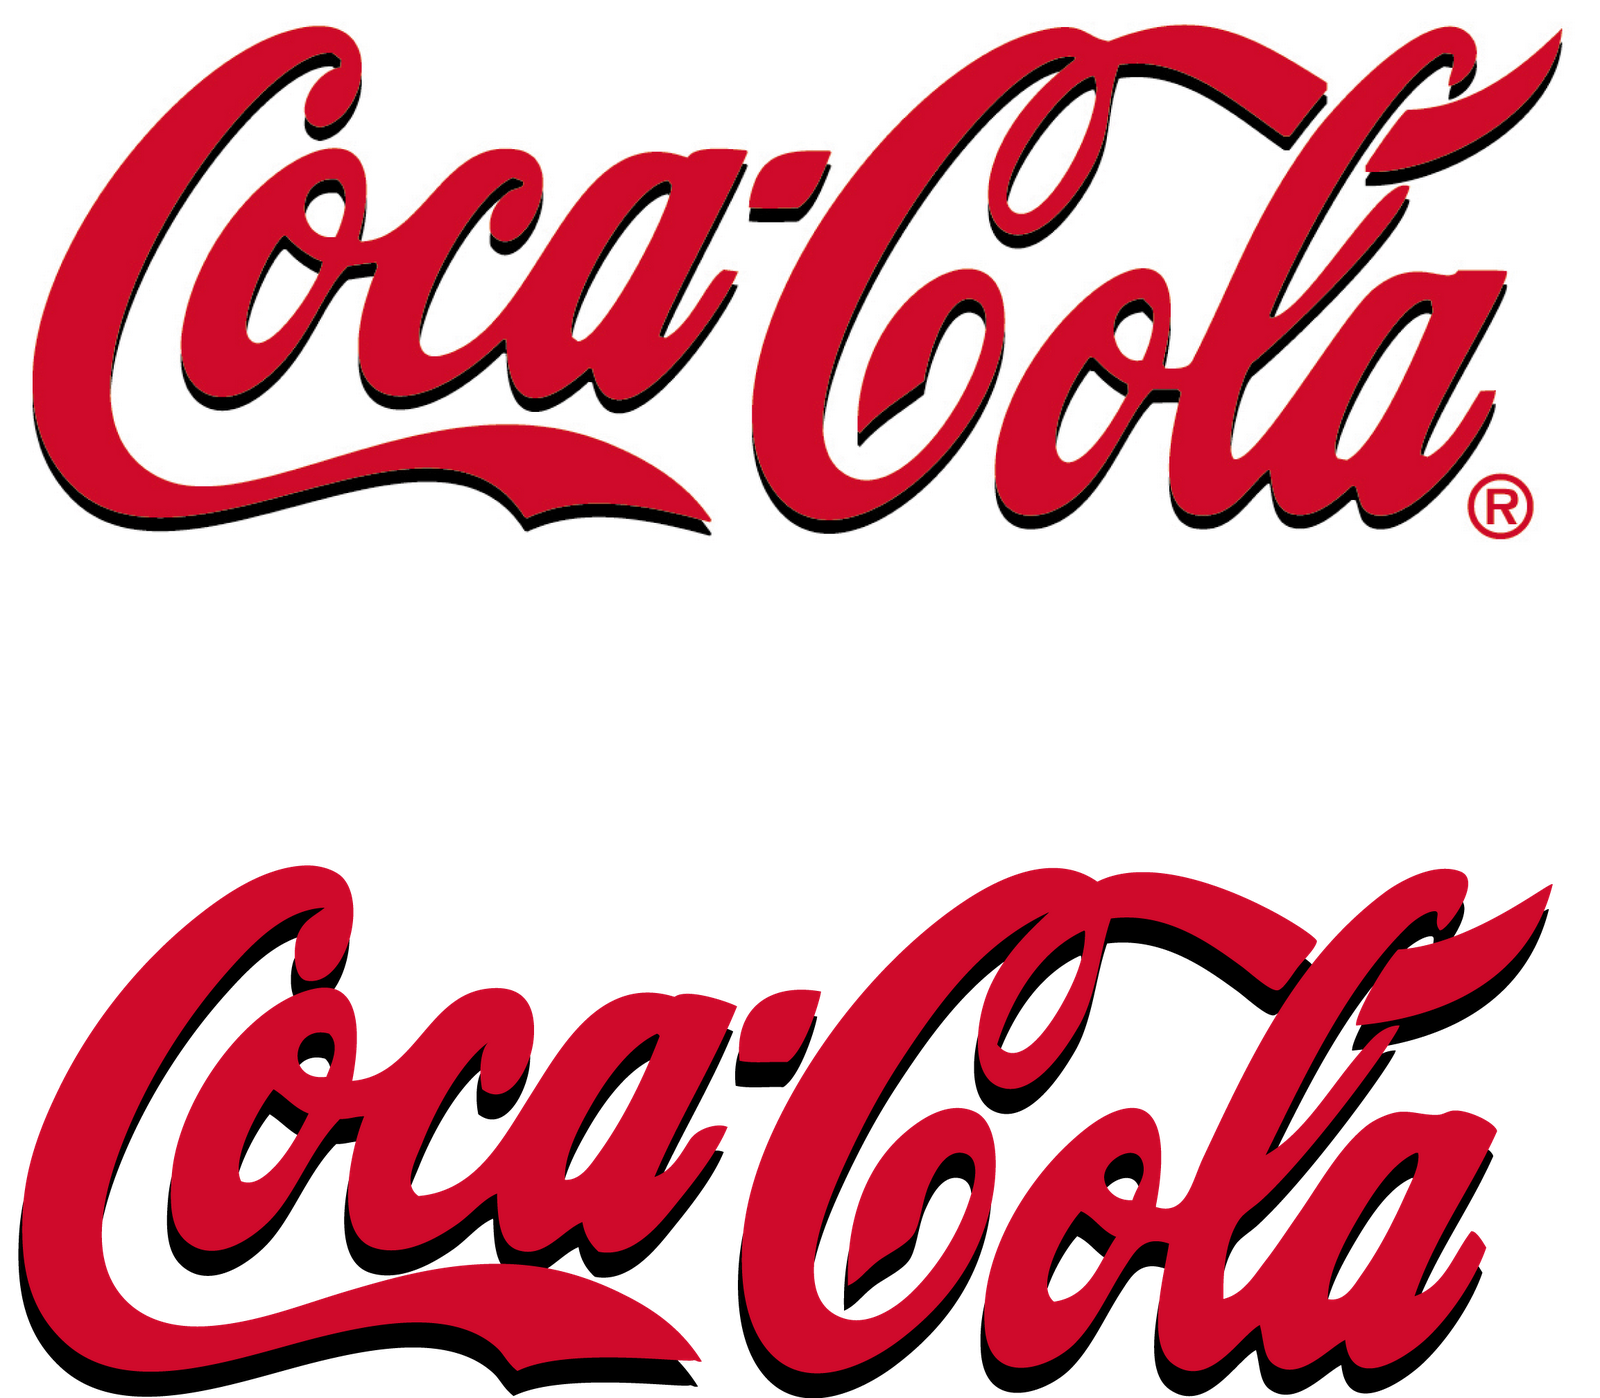 Coca Cola Logo Template